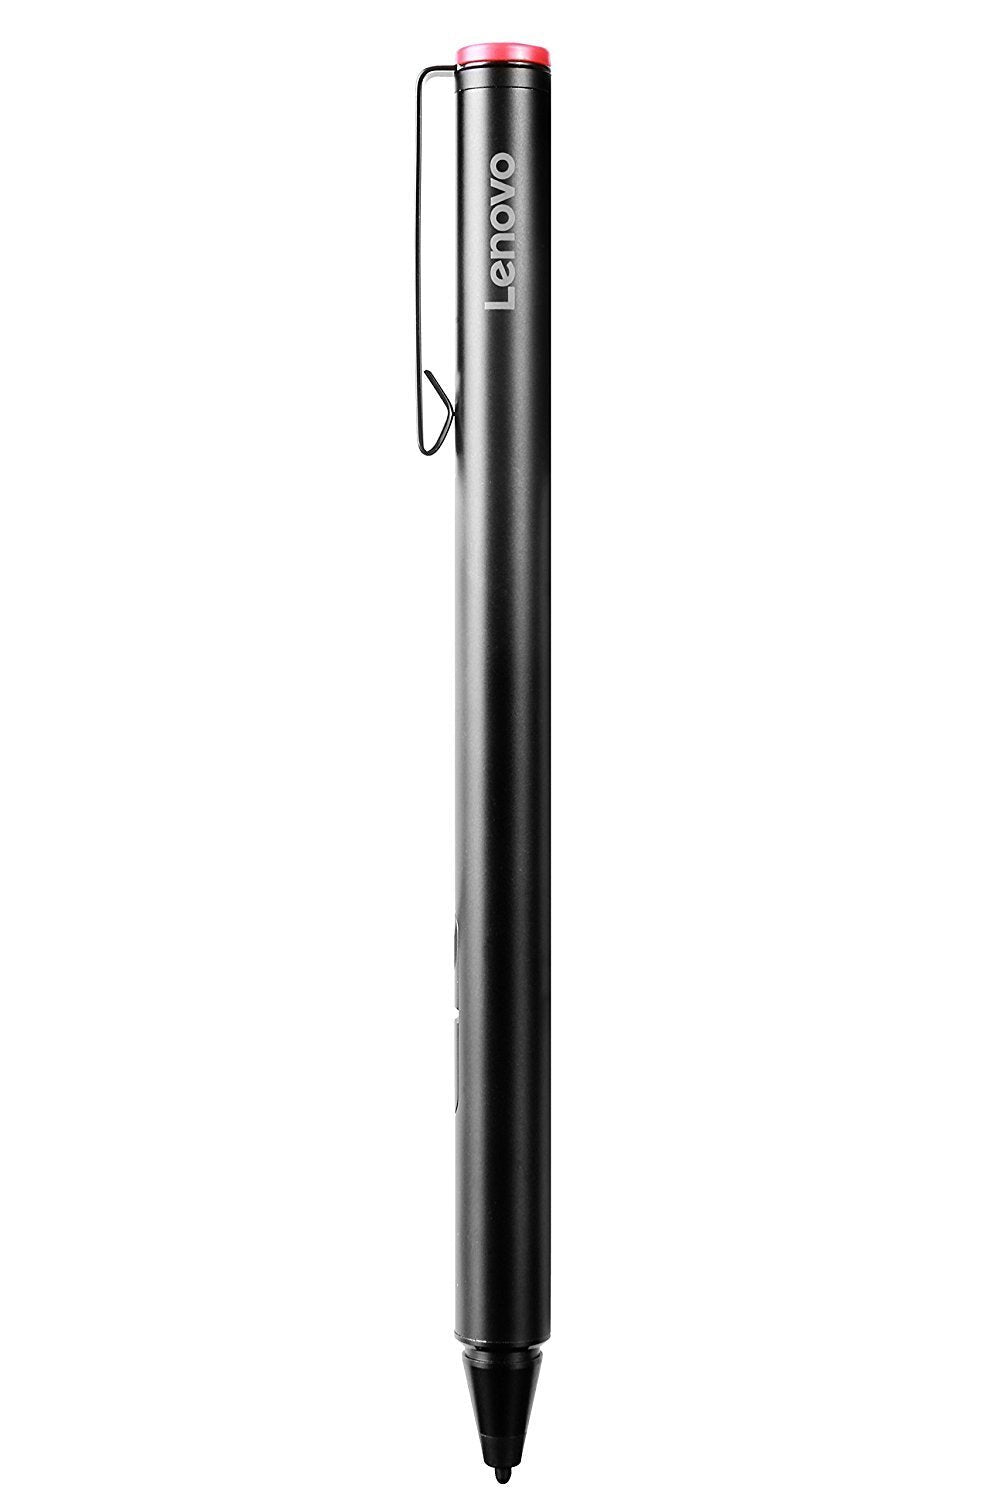  [AUSTRALIA] - Lenovo Active Capacity Pens for Touchscreen Laptop for Lenovo Yoga 900S-12ISK, Miix 700-12ISK, Miix 510-12IKB, Miix 510-12ISK, Miix 720-12IKB,GX80K32882 - Black